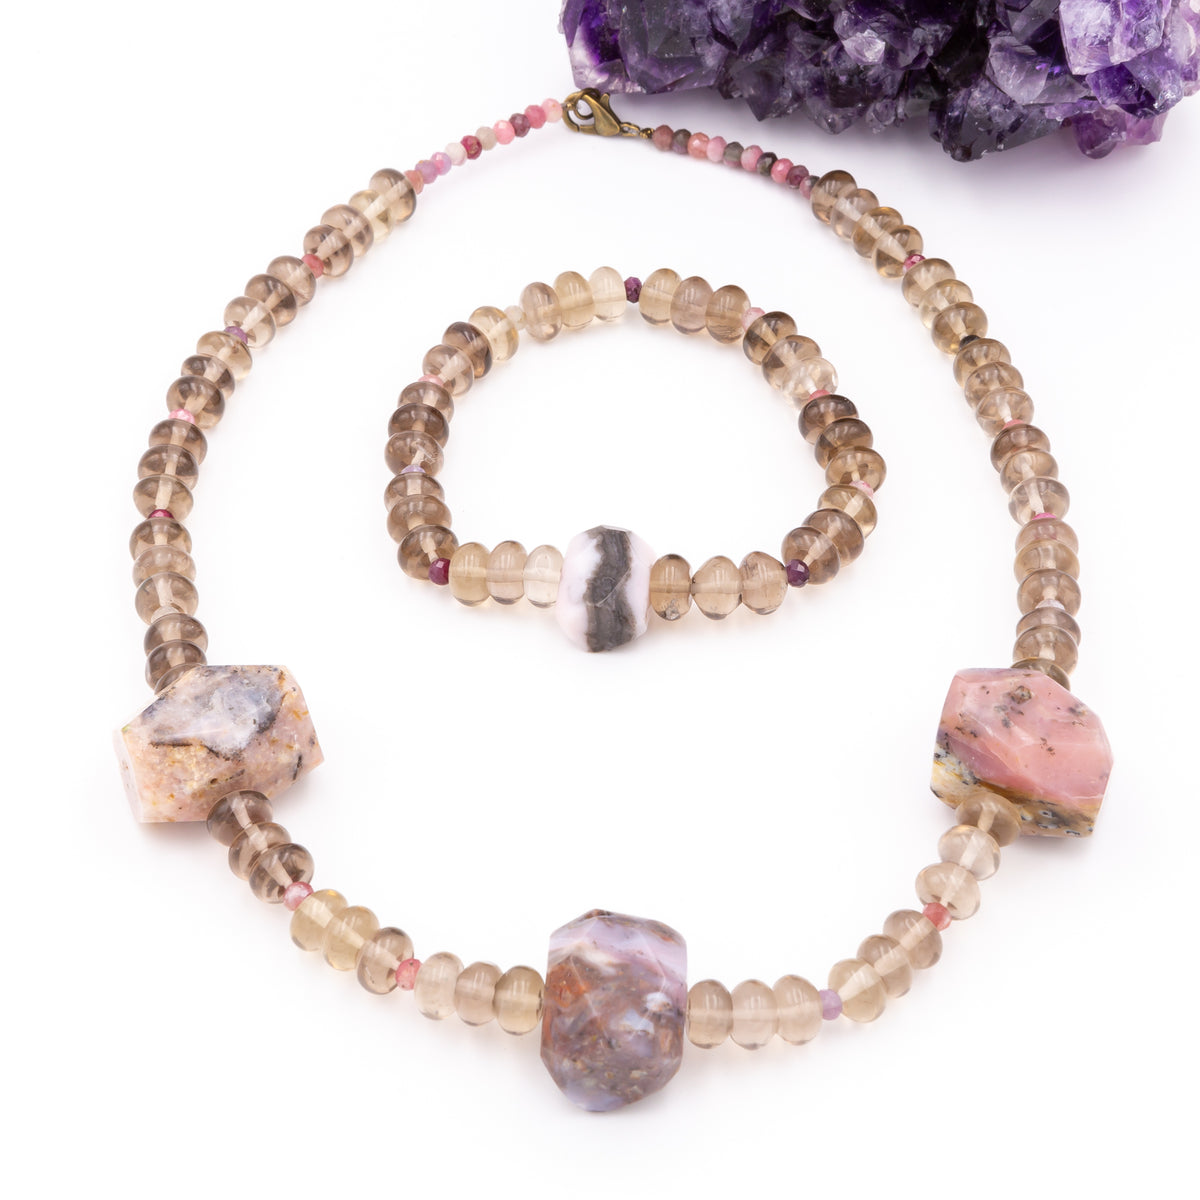 Smoky Quartz and Pink Opal Necklace